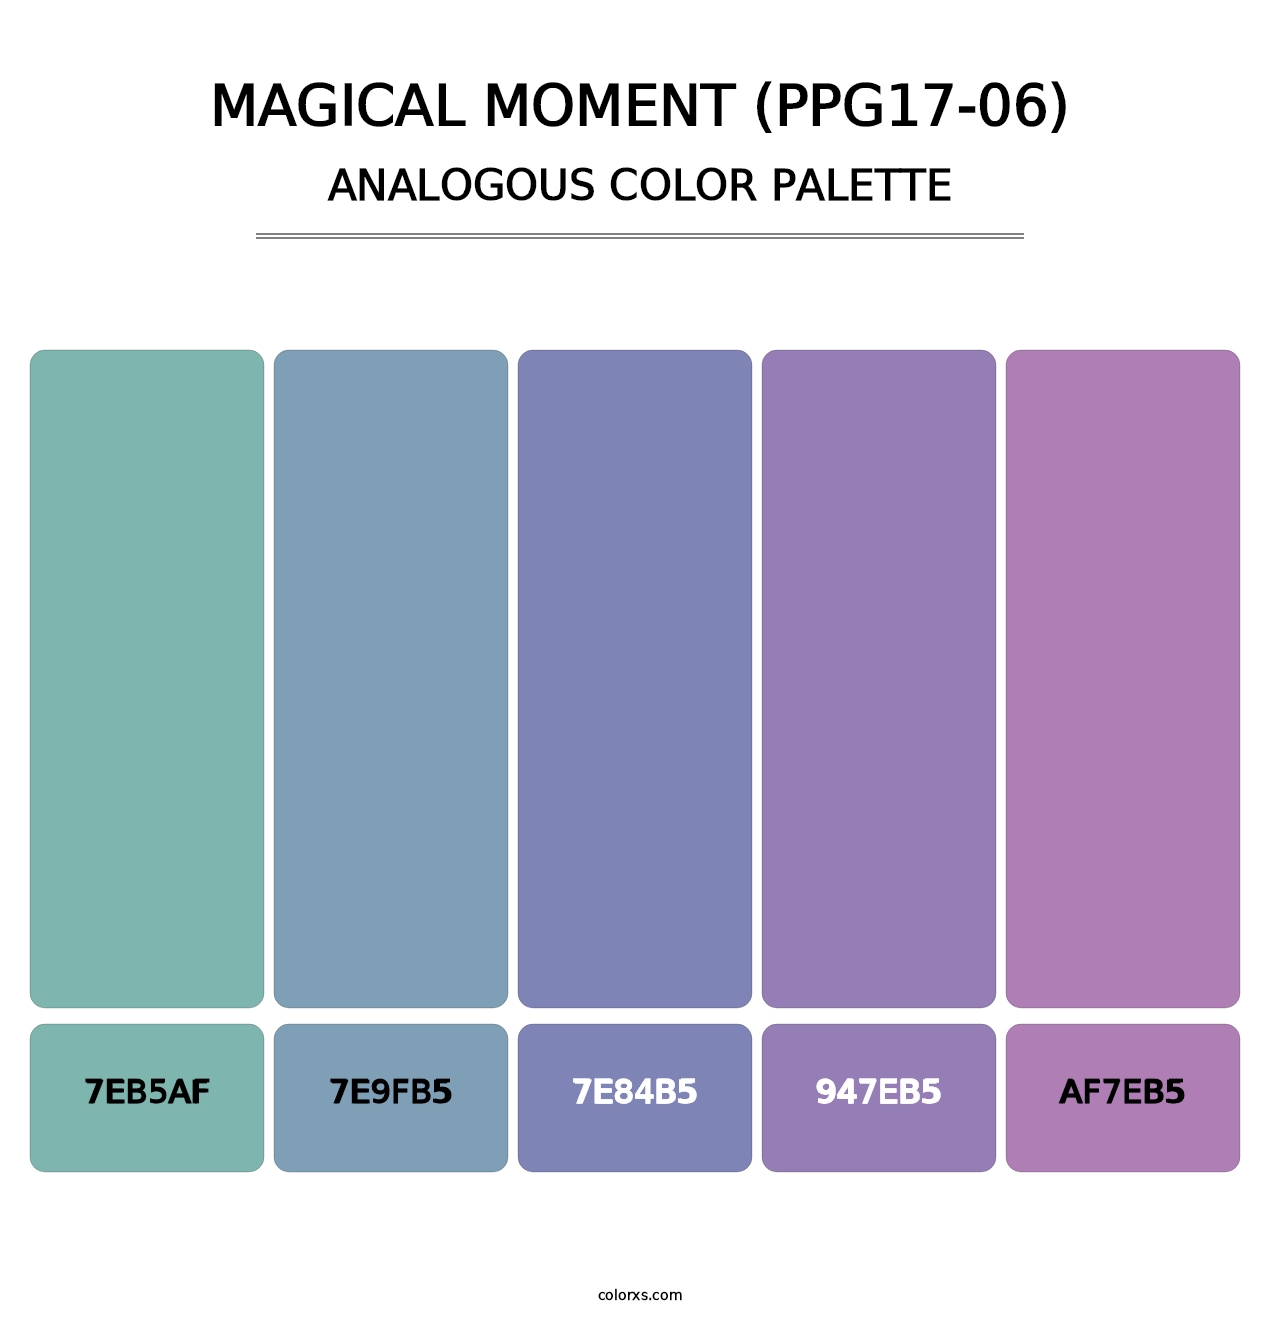 Magical Moment (PPG17-06) - Analogous Color Palette